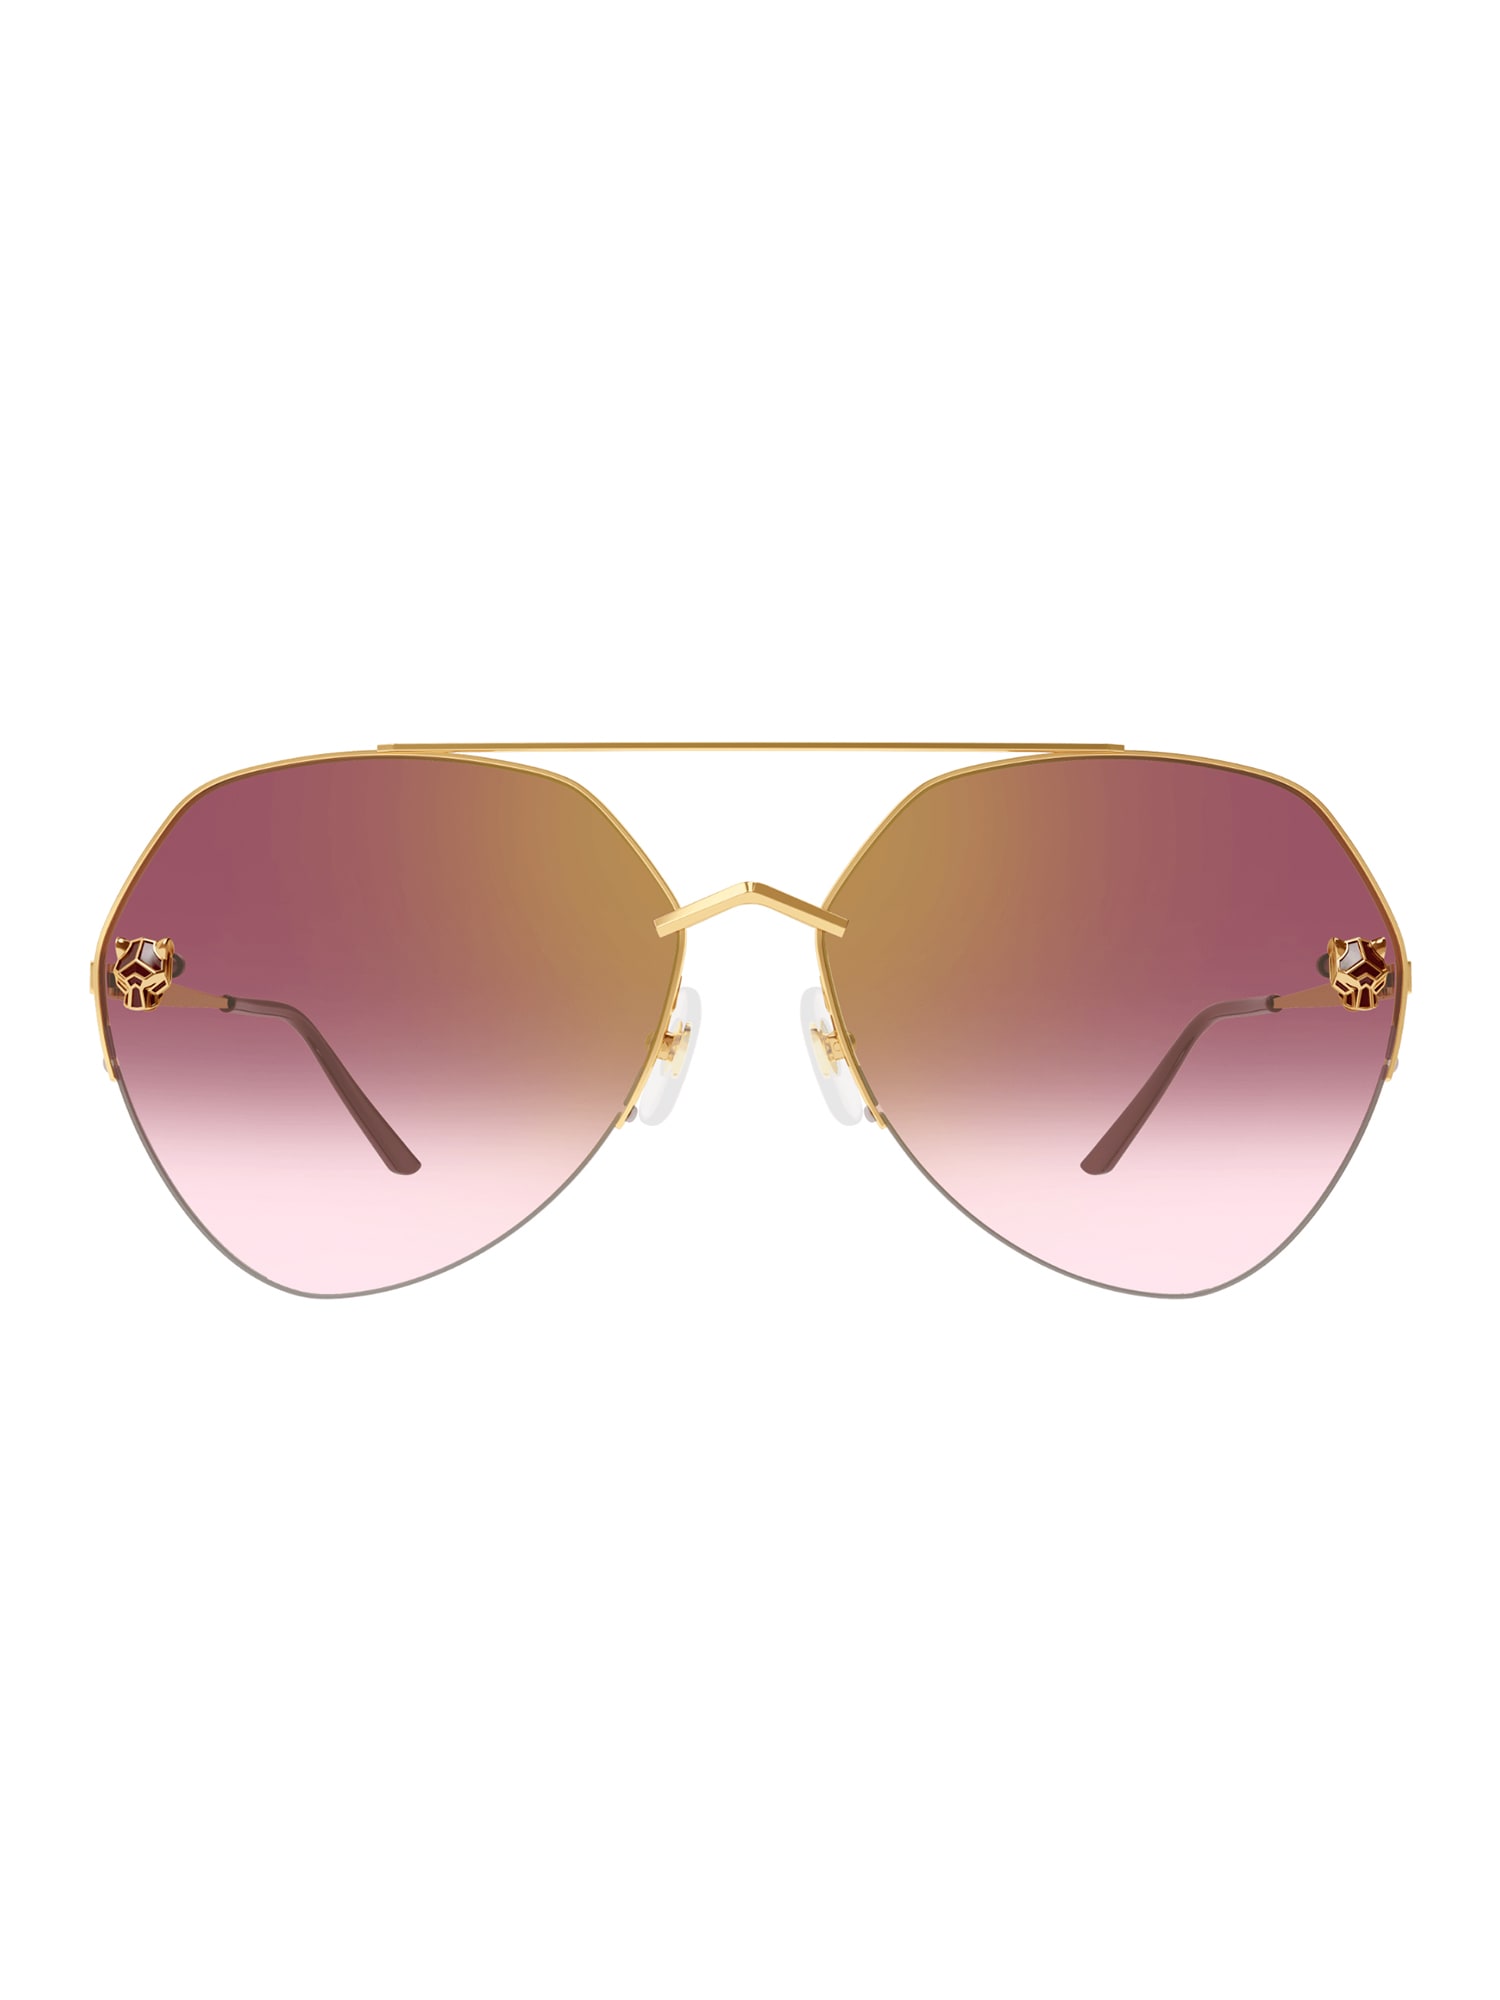 Pantheree De Cartier Sunglasses